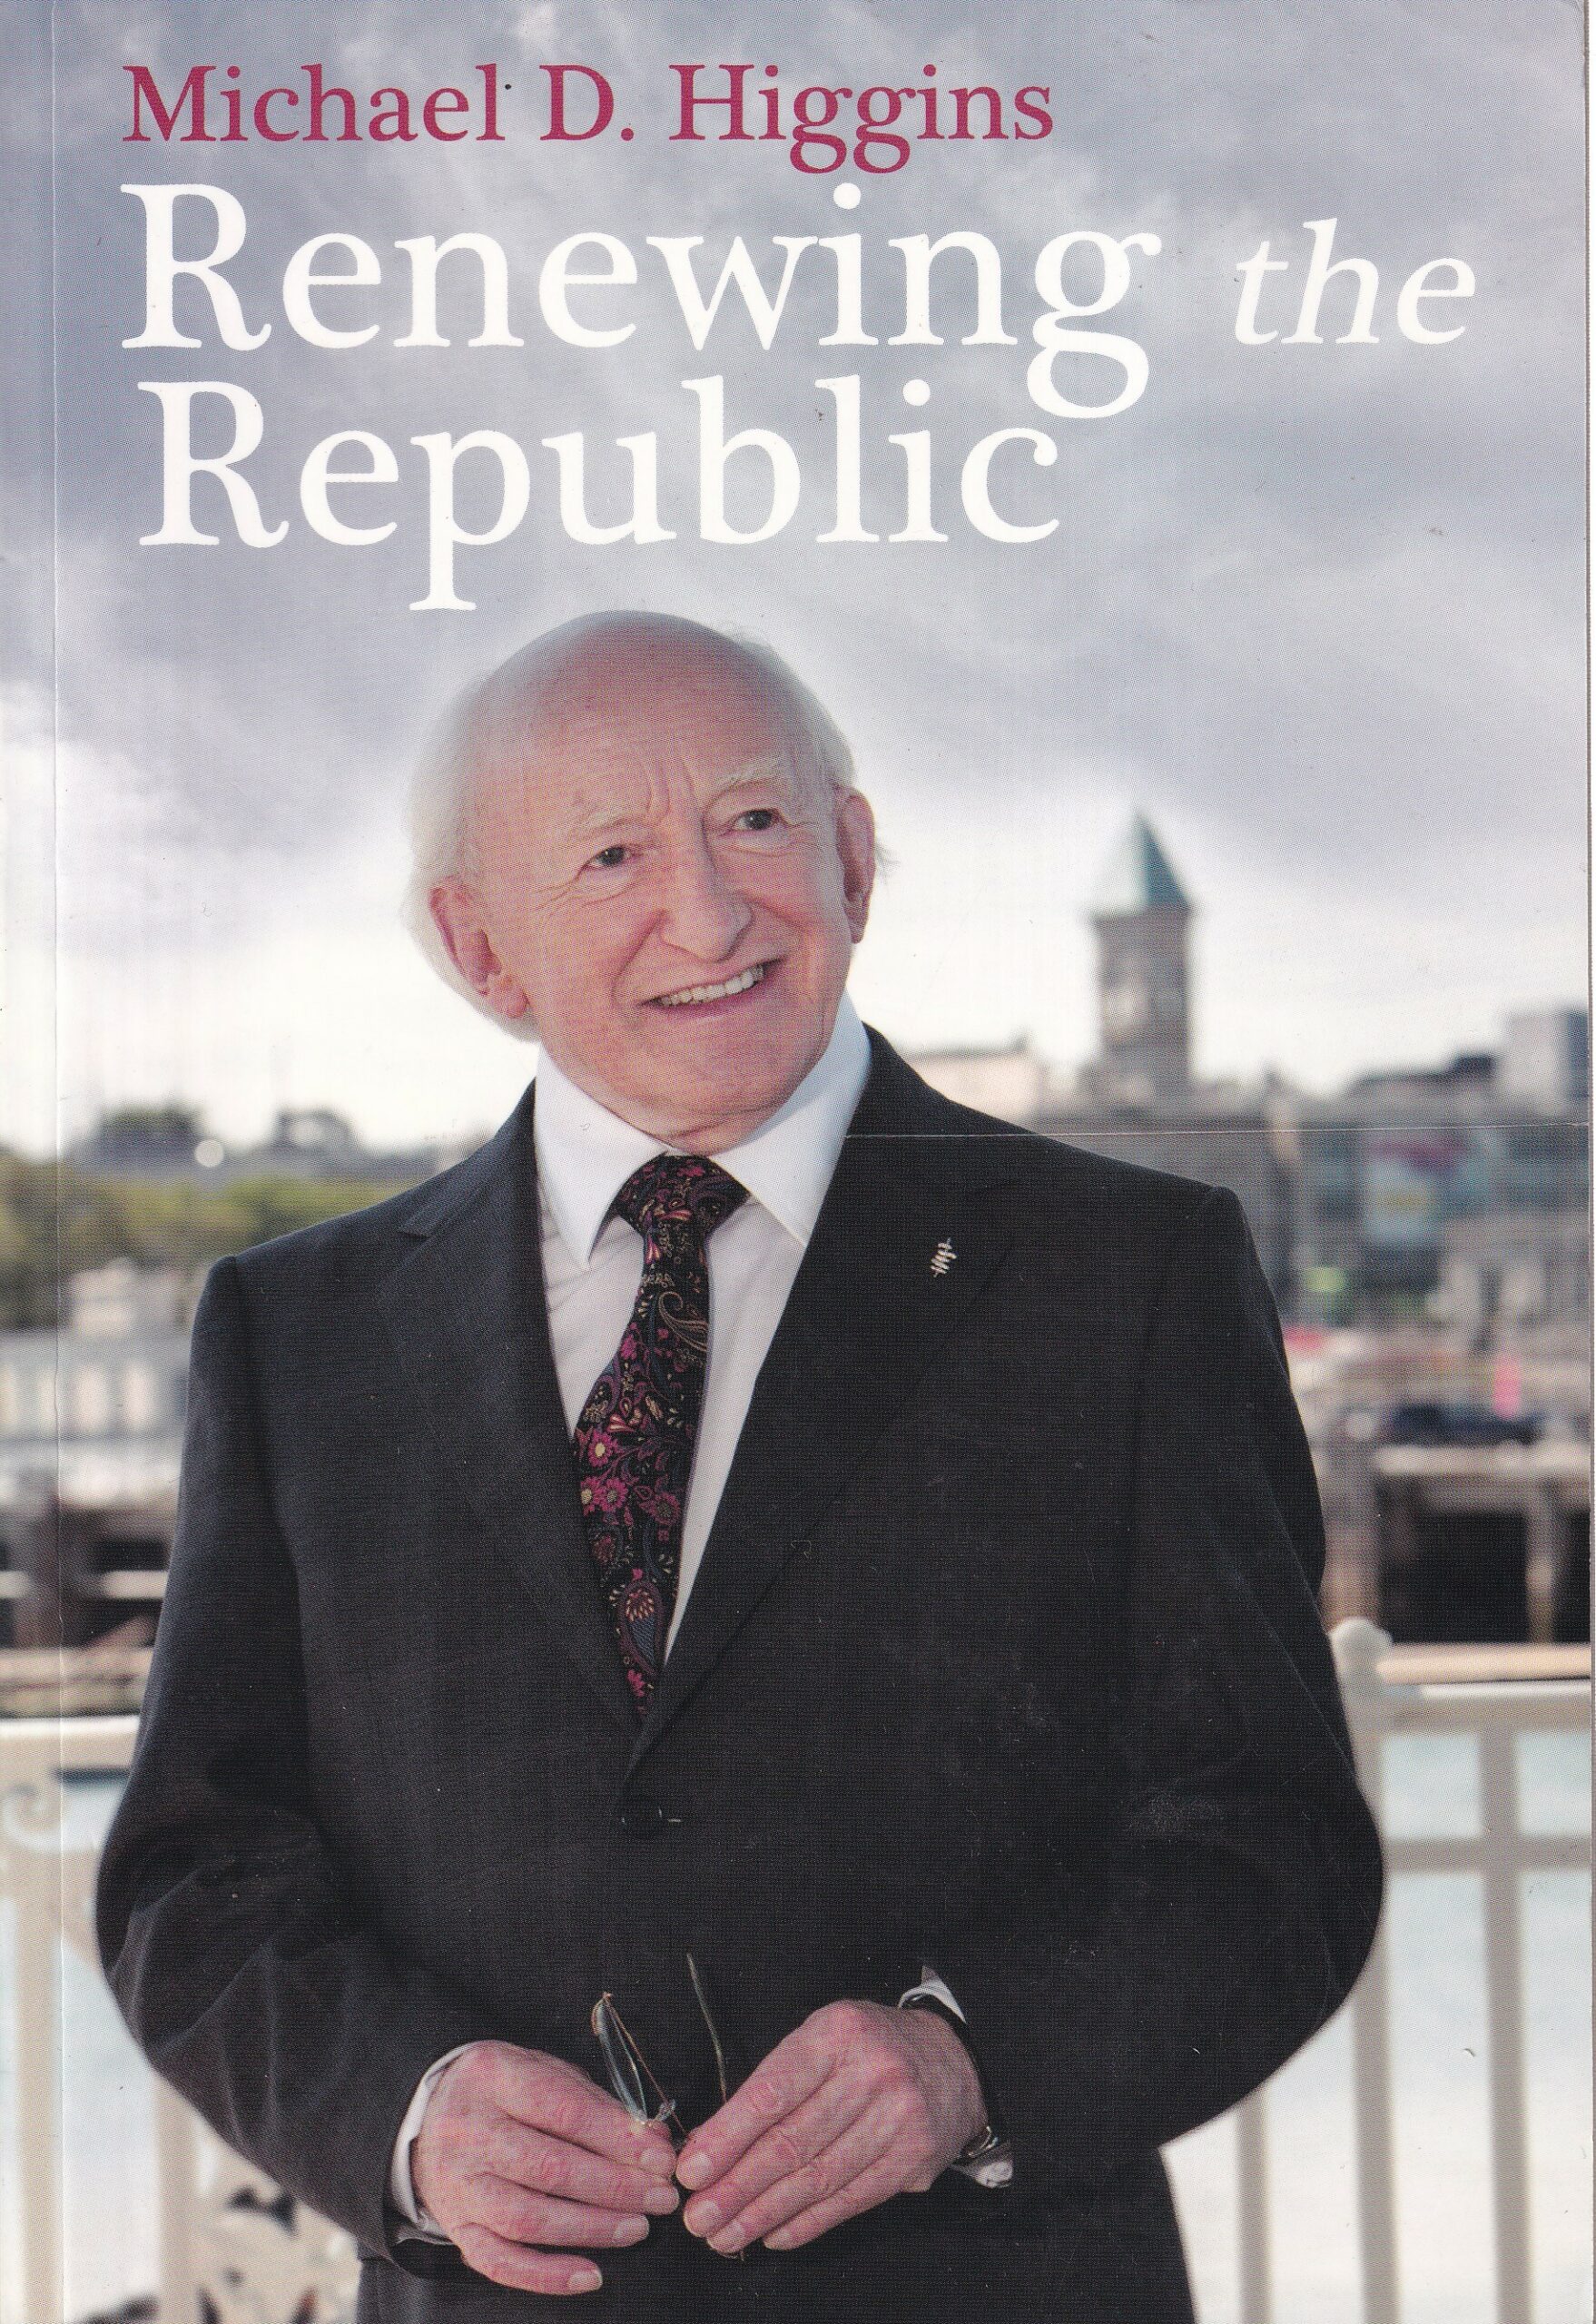 Renewing the Republic by Michael D. Higgins